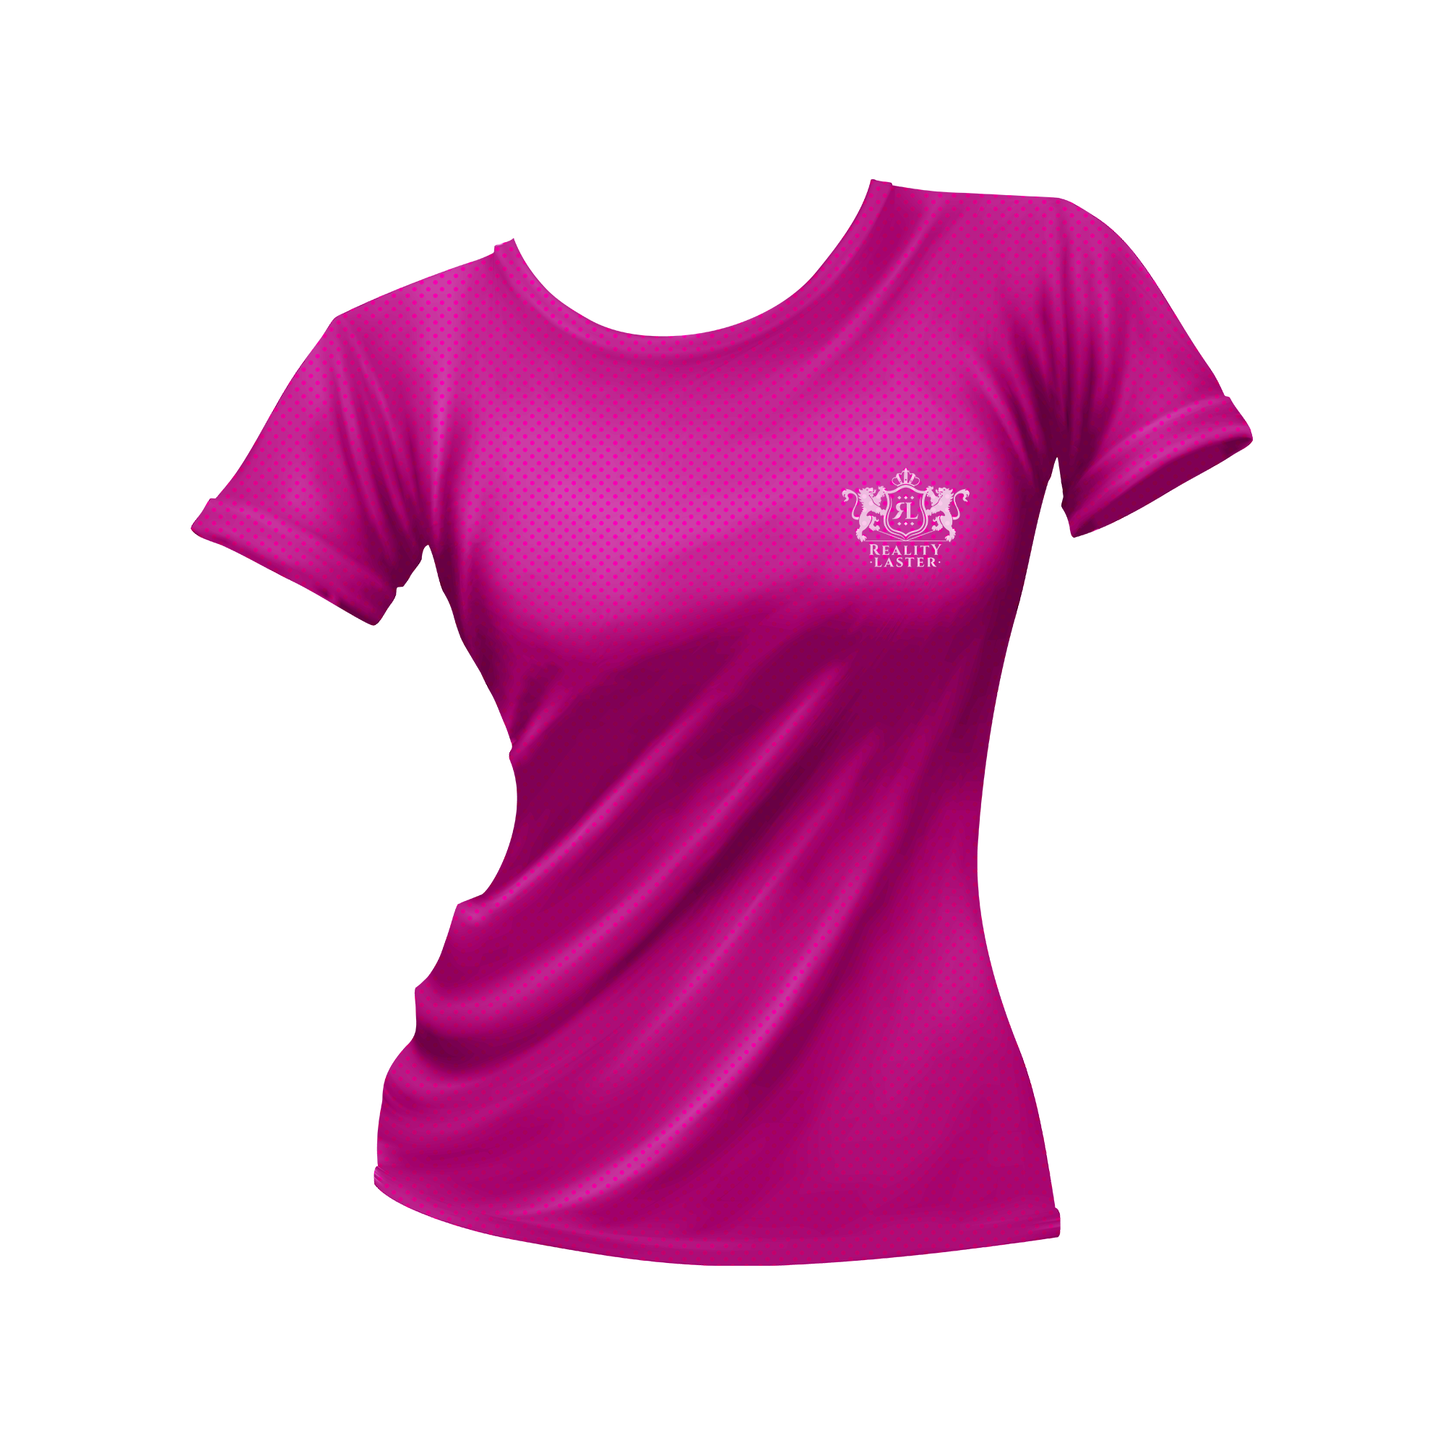 Women's Pink Tee Shirts